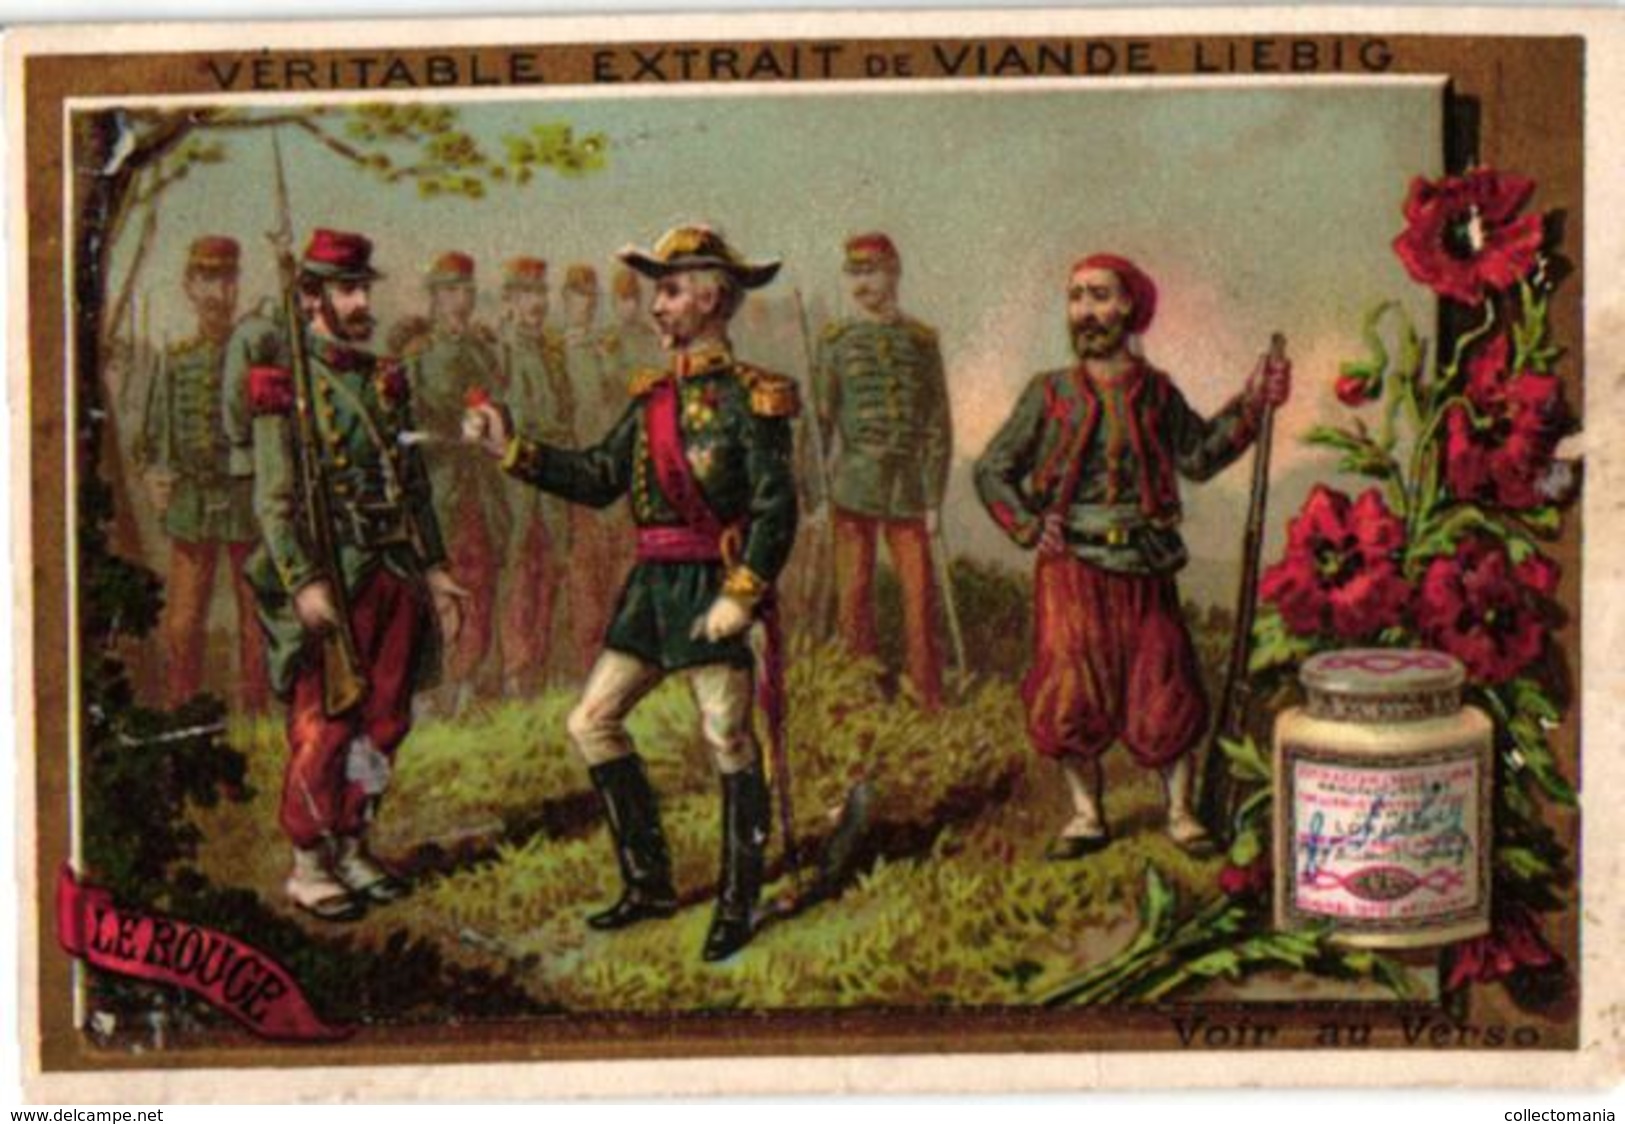 170 Couleurs, Colors COMPL. Serie 7 Chromo Litho Trade  Cards  LIEBIG Nr 170  Belgian Edition 6 Cartes +1 French Card - Liebig